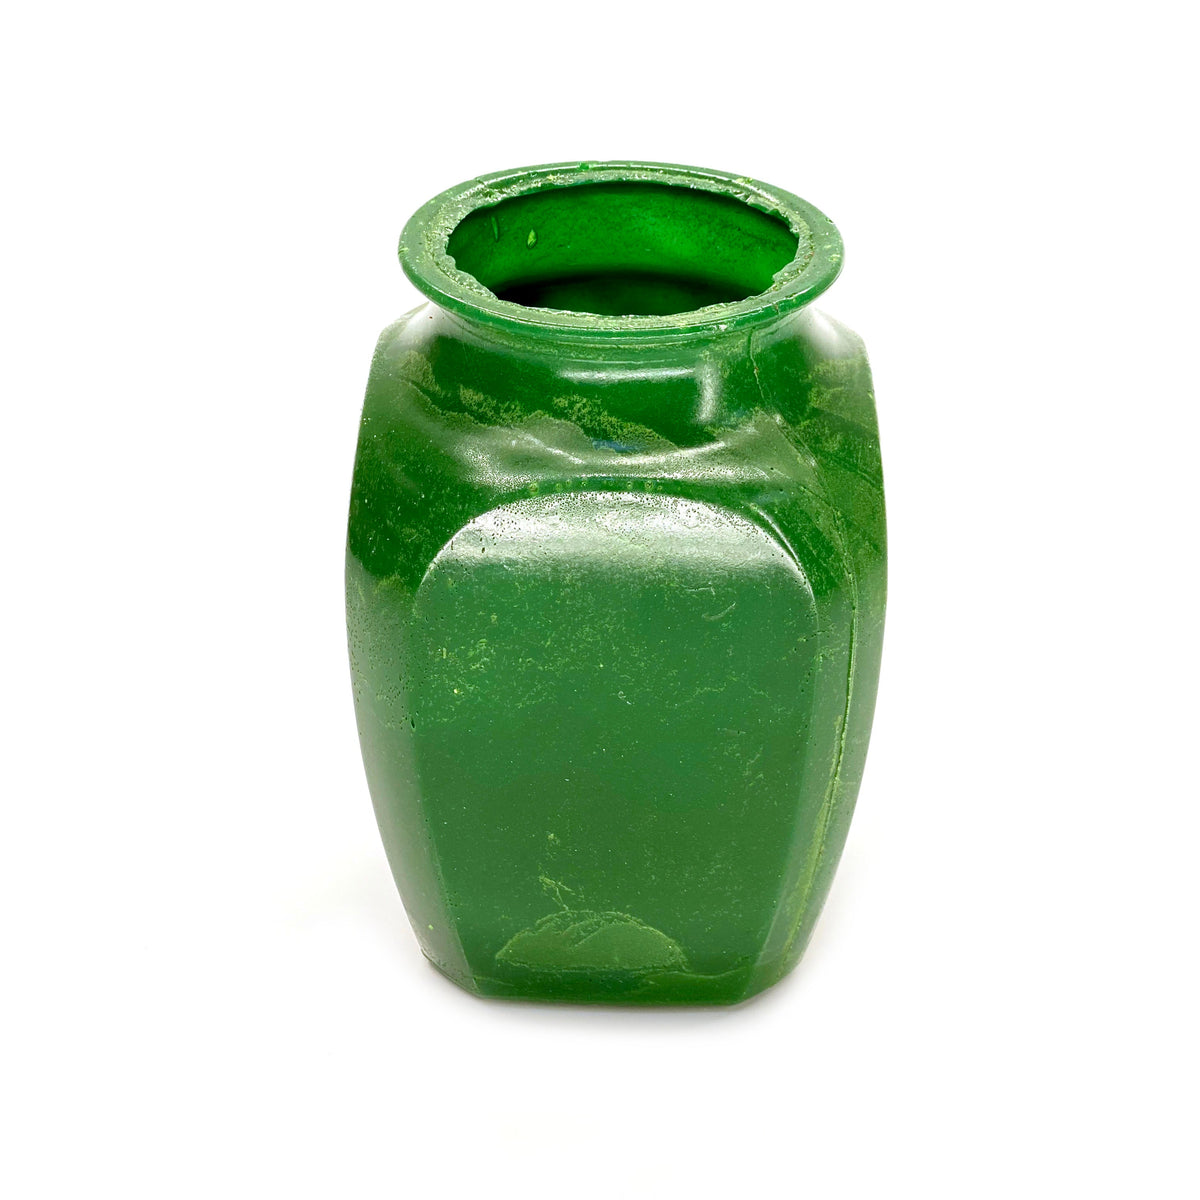 SMASHProps Breakaway Square Sided Vase or Urn - DARK GREEN opaque - Dark Green,Opaque